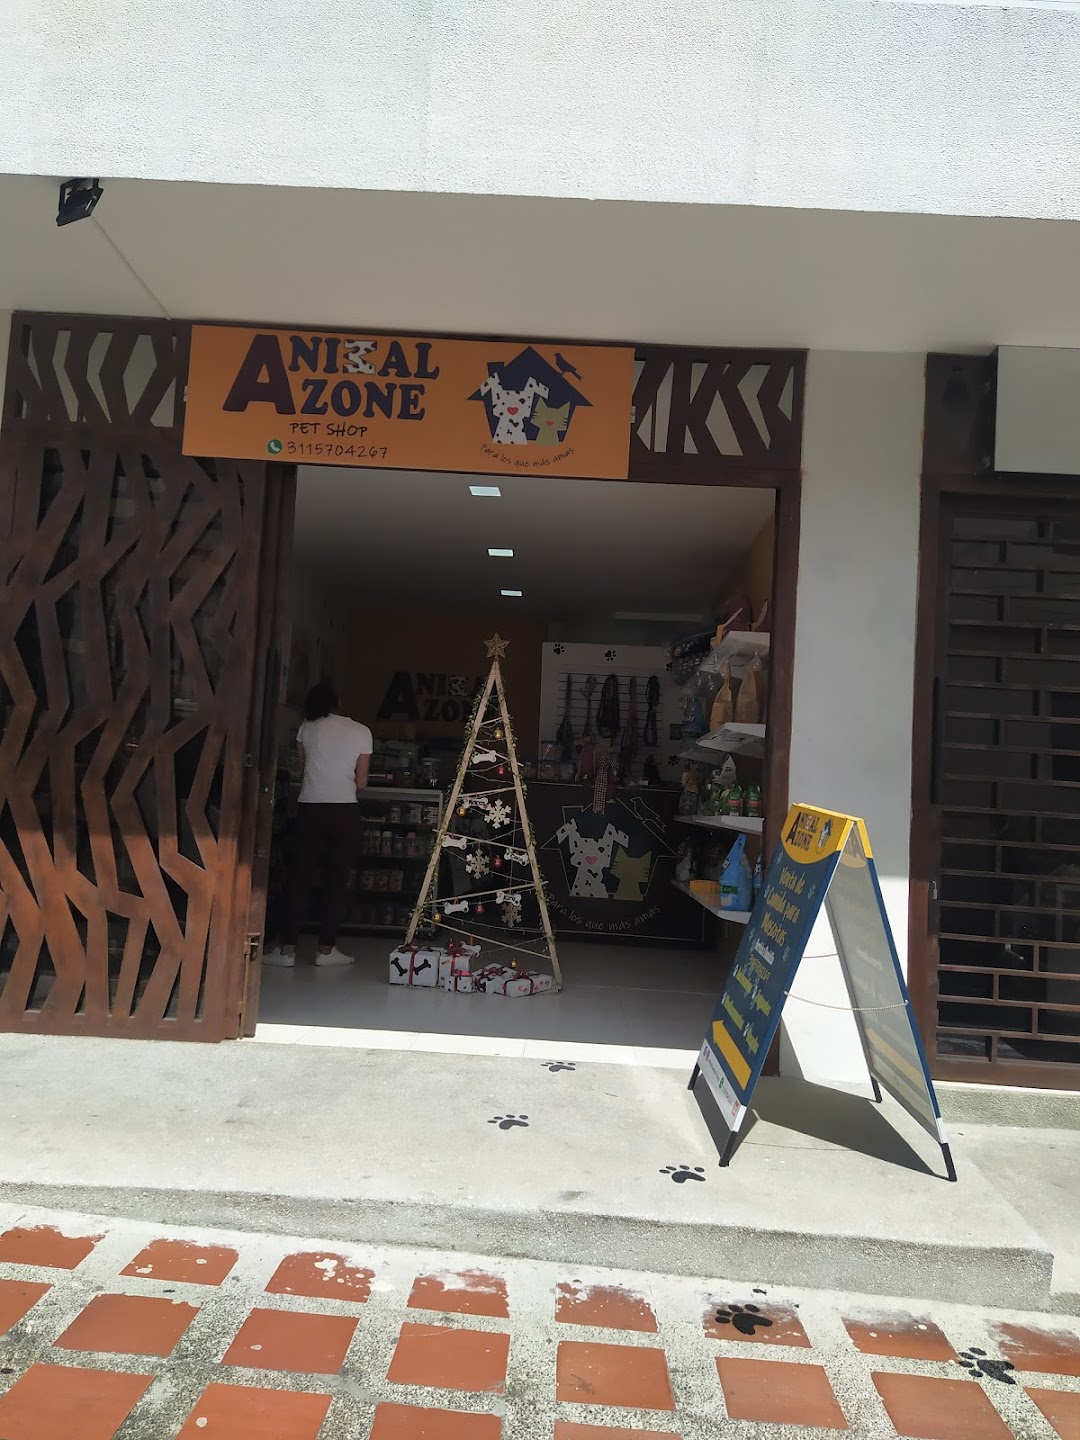 Animal zone pet shop